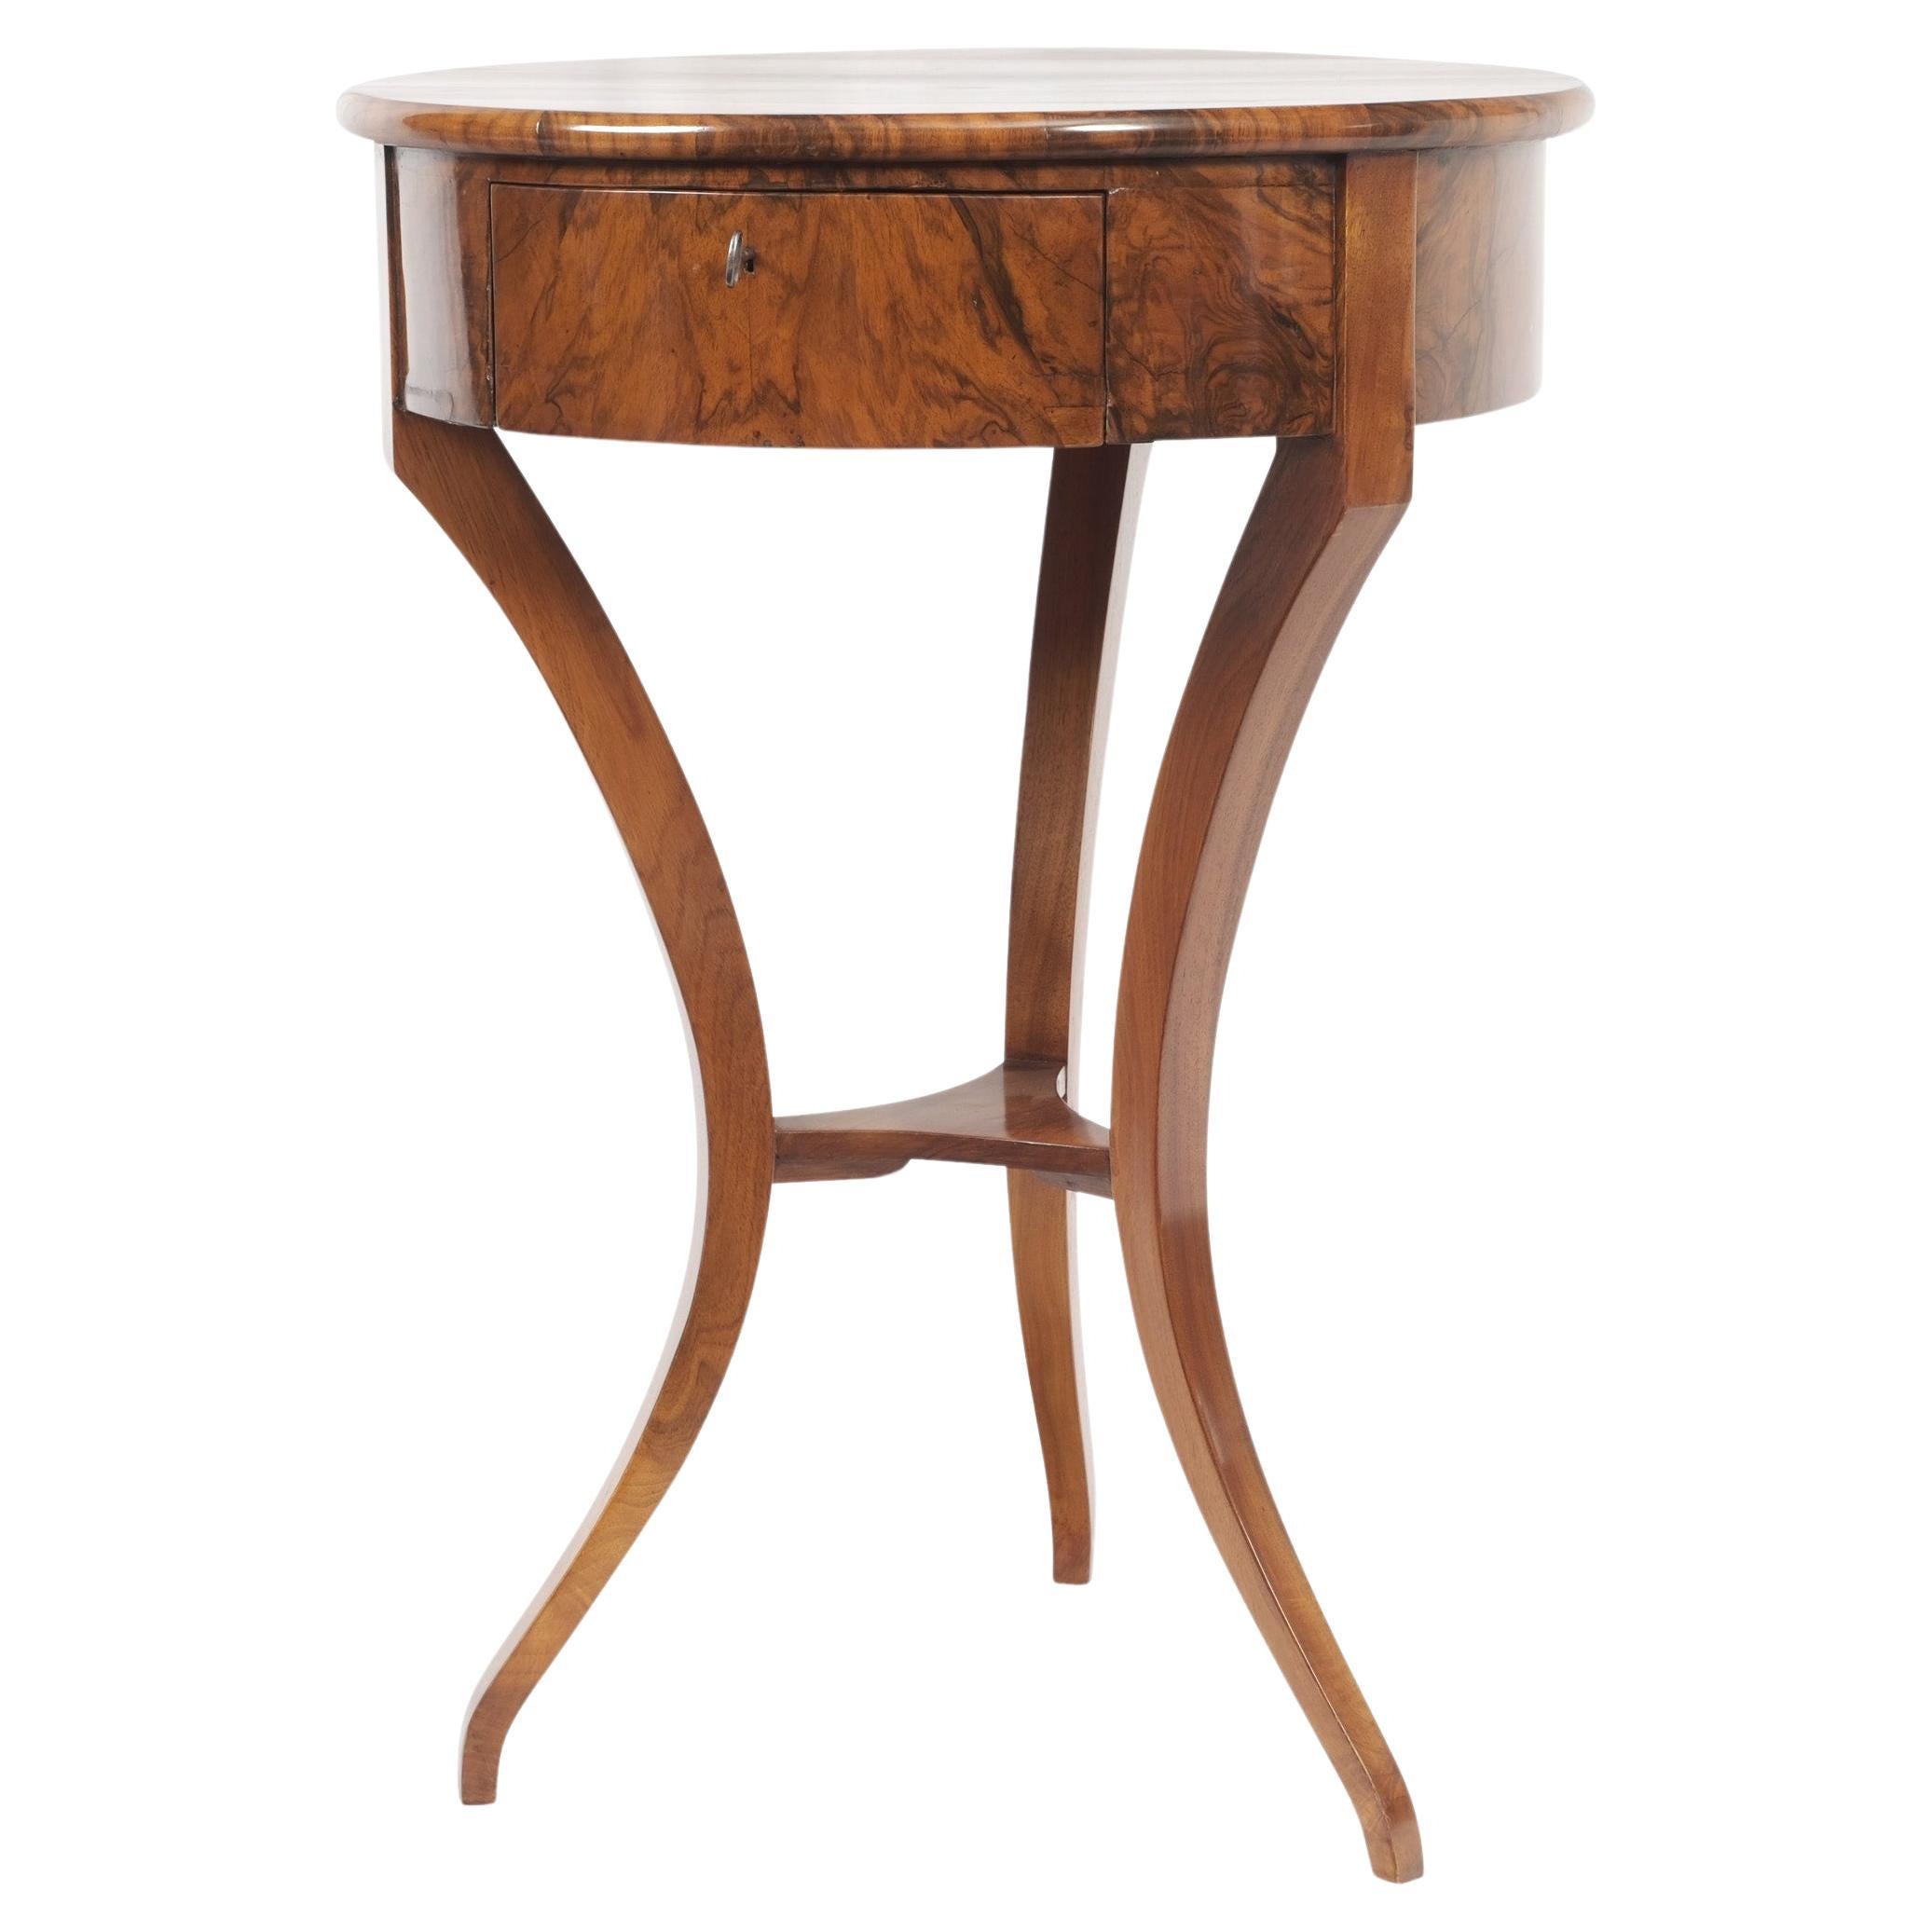 19th Century round Biedermeier Sewing Side Table Walnut and Walnut Root Veneer For Sale